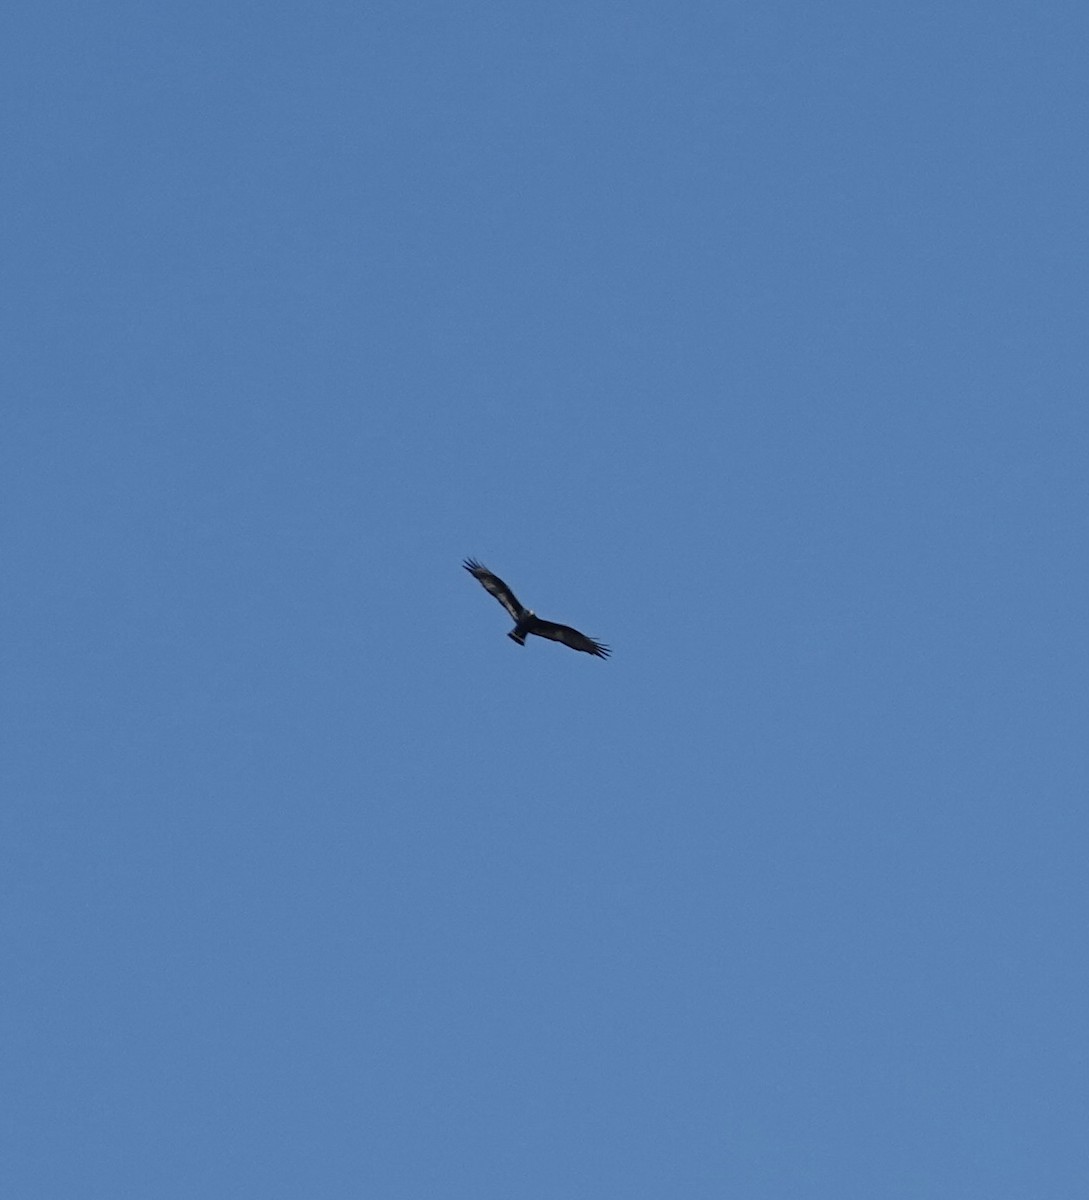 Zone-tailed Hawk - deidre asbjorn